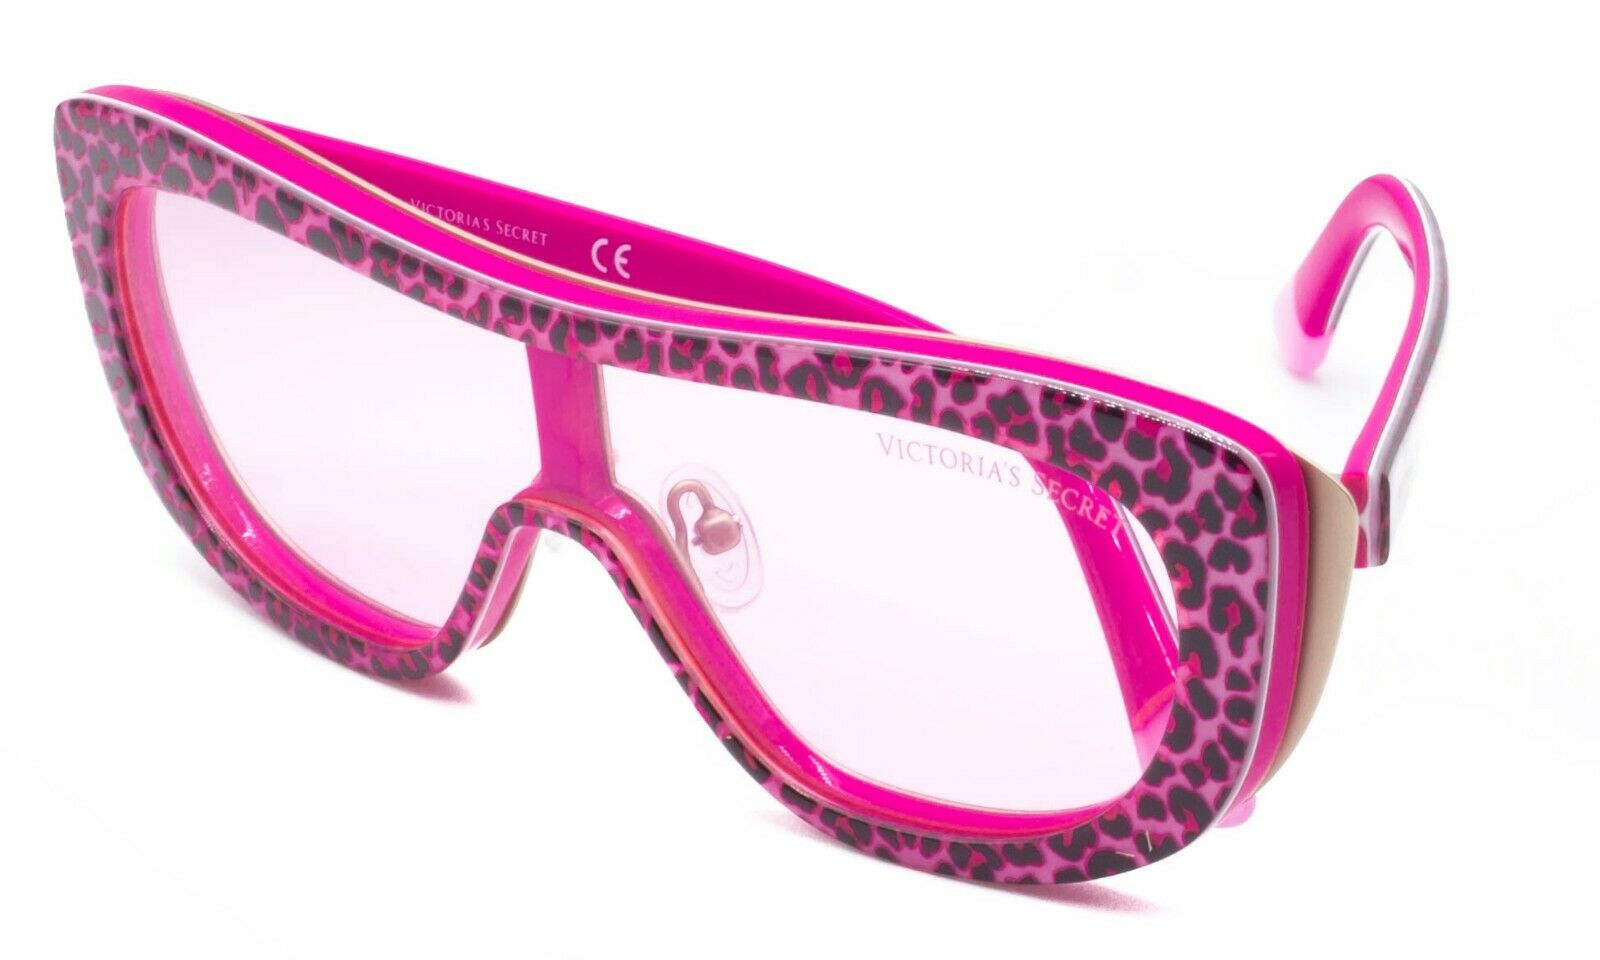 VICTORIA'S SECRET VS0011 77T 128mm Sunglasses Eyewear Shades Frames Glasses New